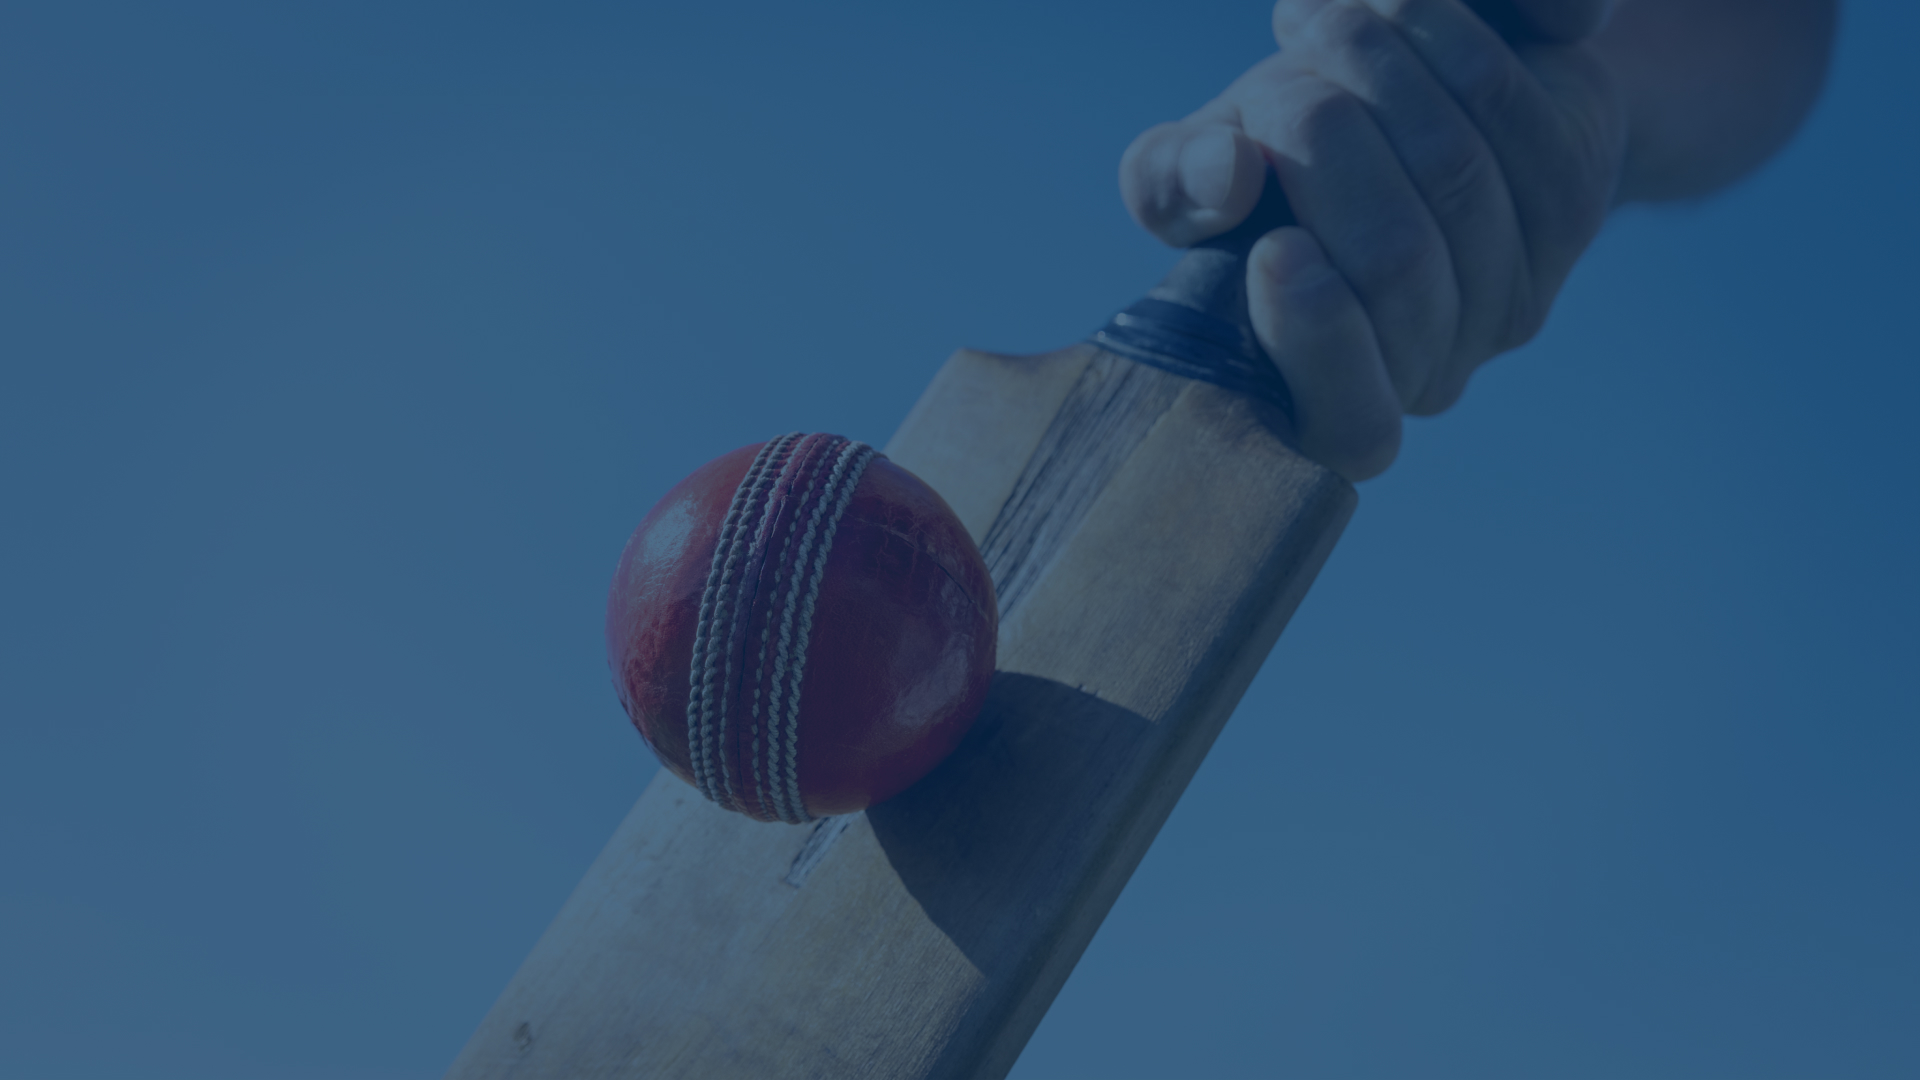 Closeup of a cricket bat hitting a cricket ball